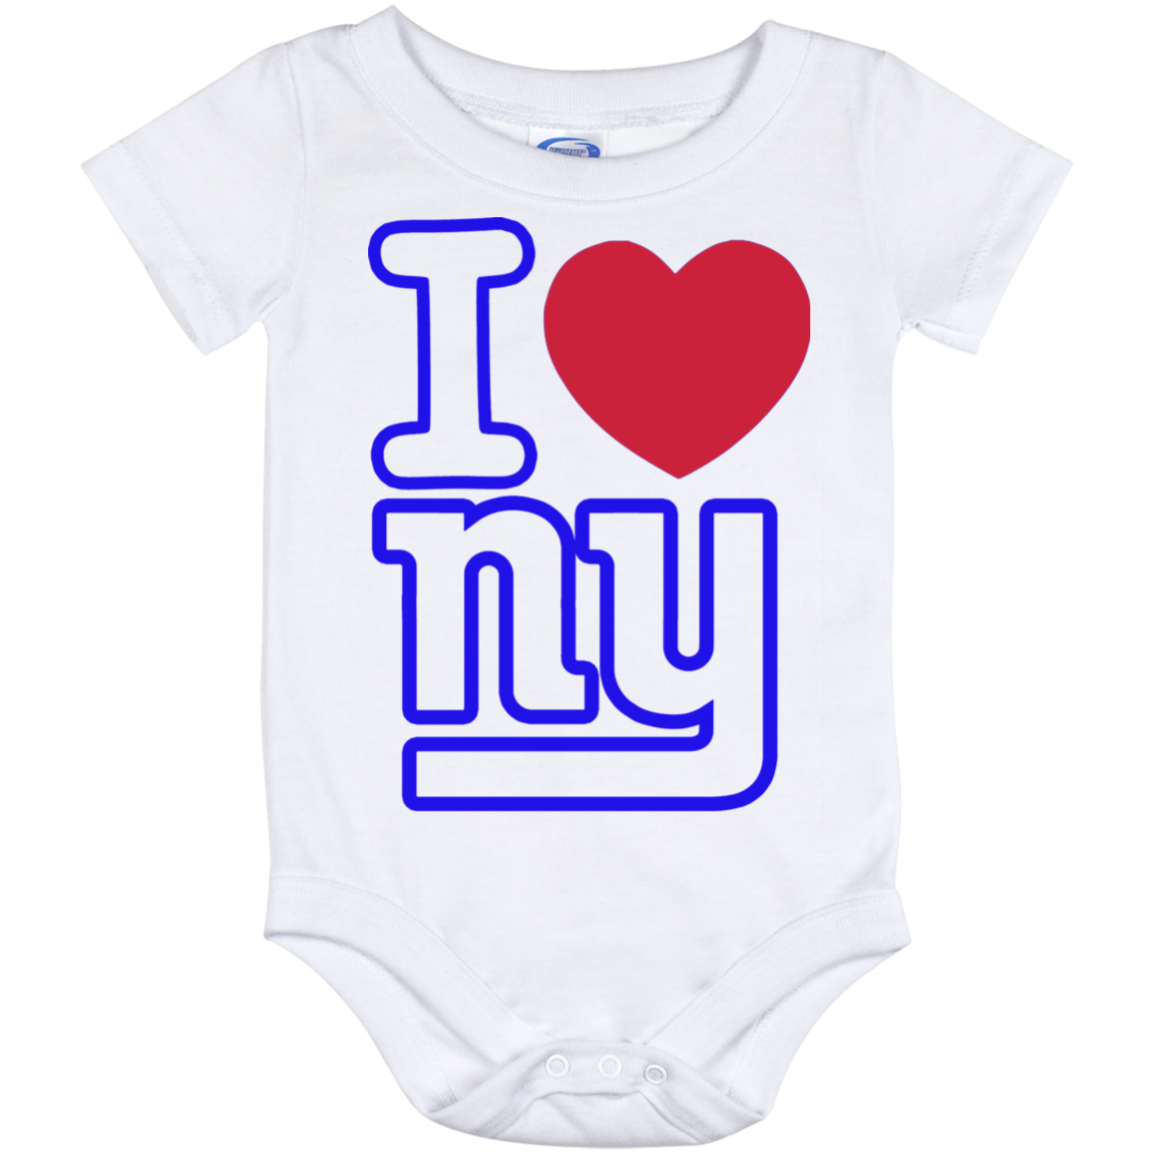 ArtichokeUSA Custom Design. I heart New York Giants. NY Giants Football Fan Art. Baby Onesie 12 Month